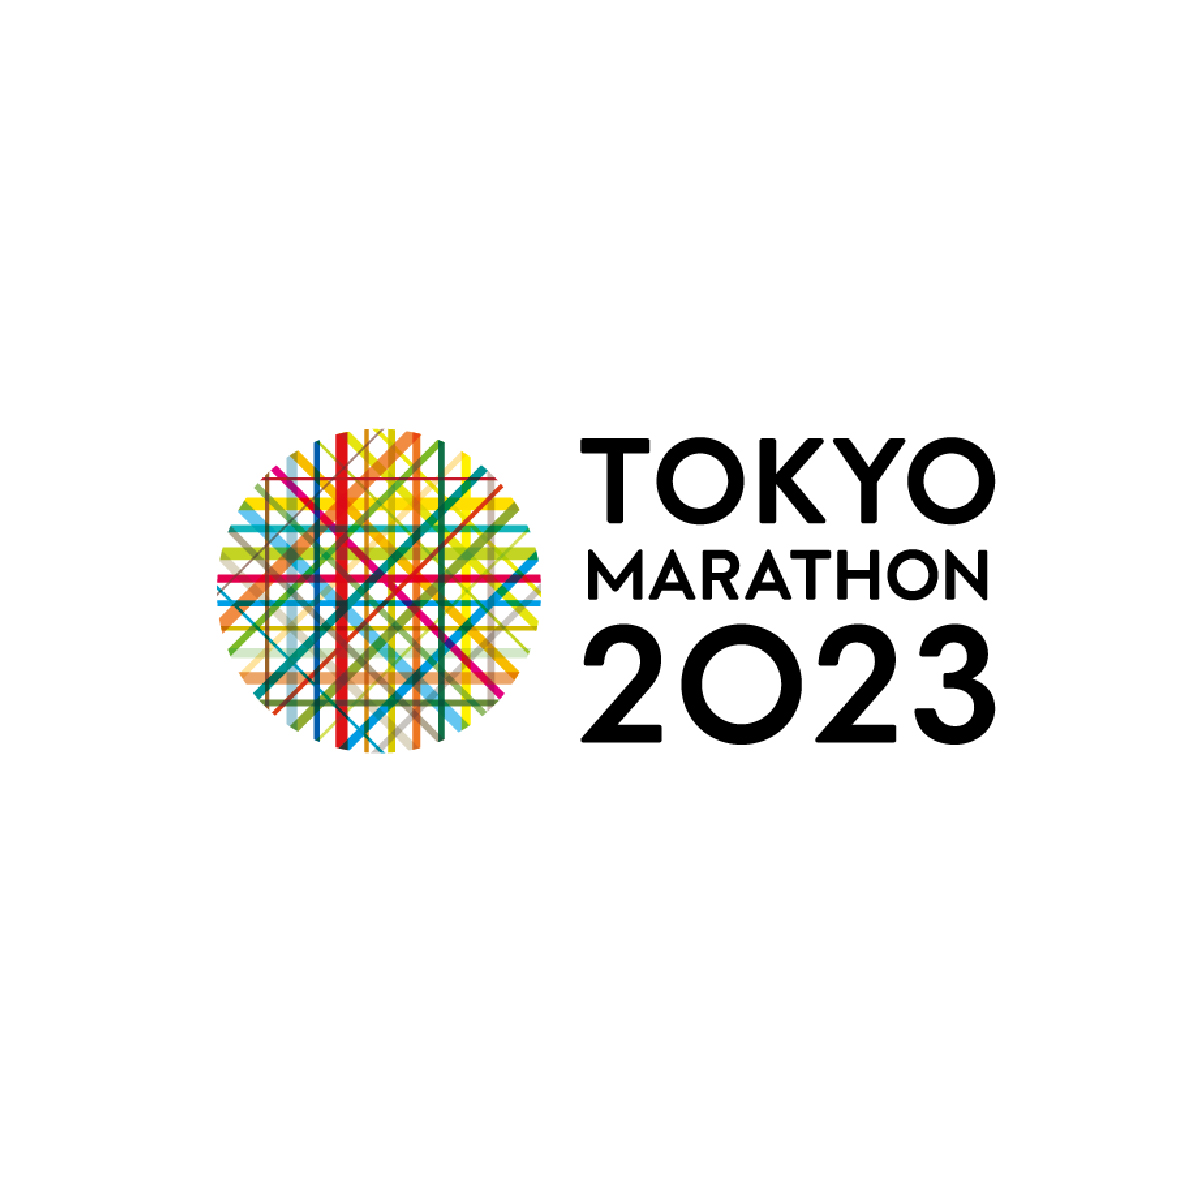 Image Song TOKYO MARATHON 2023